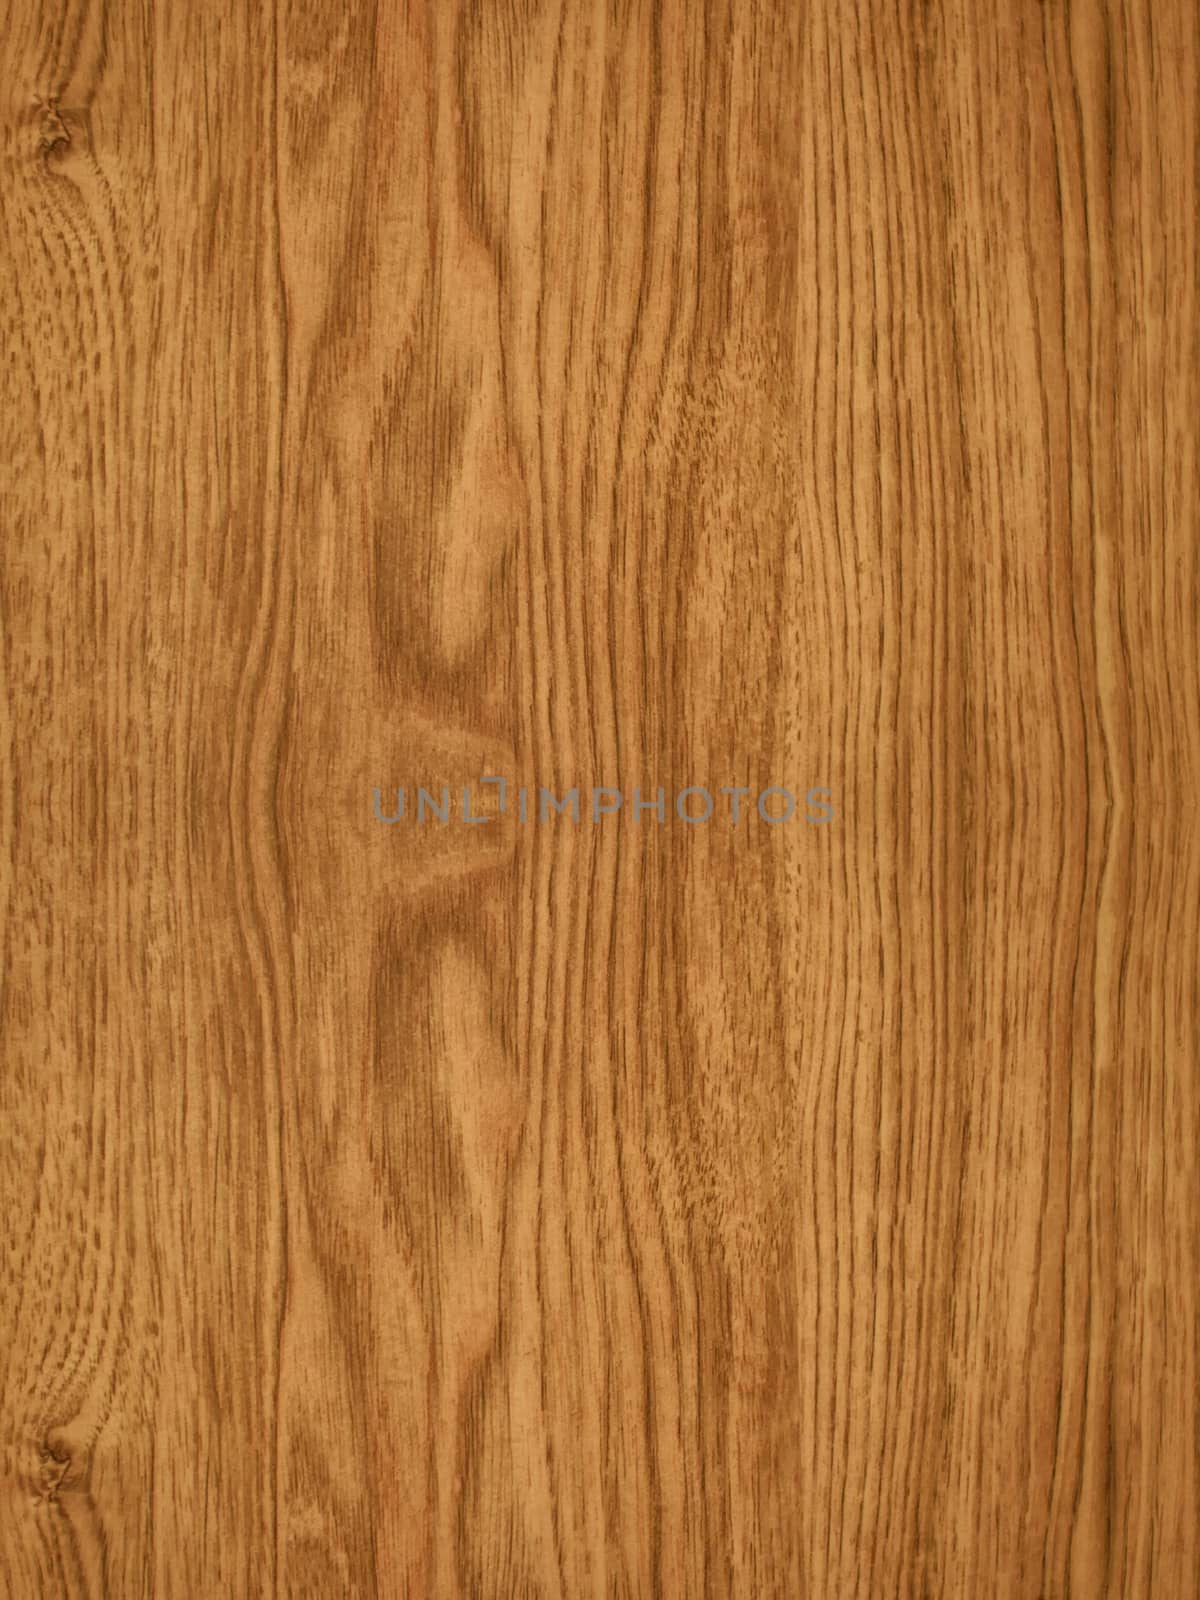 High resolution natural woodgrain texture.